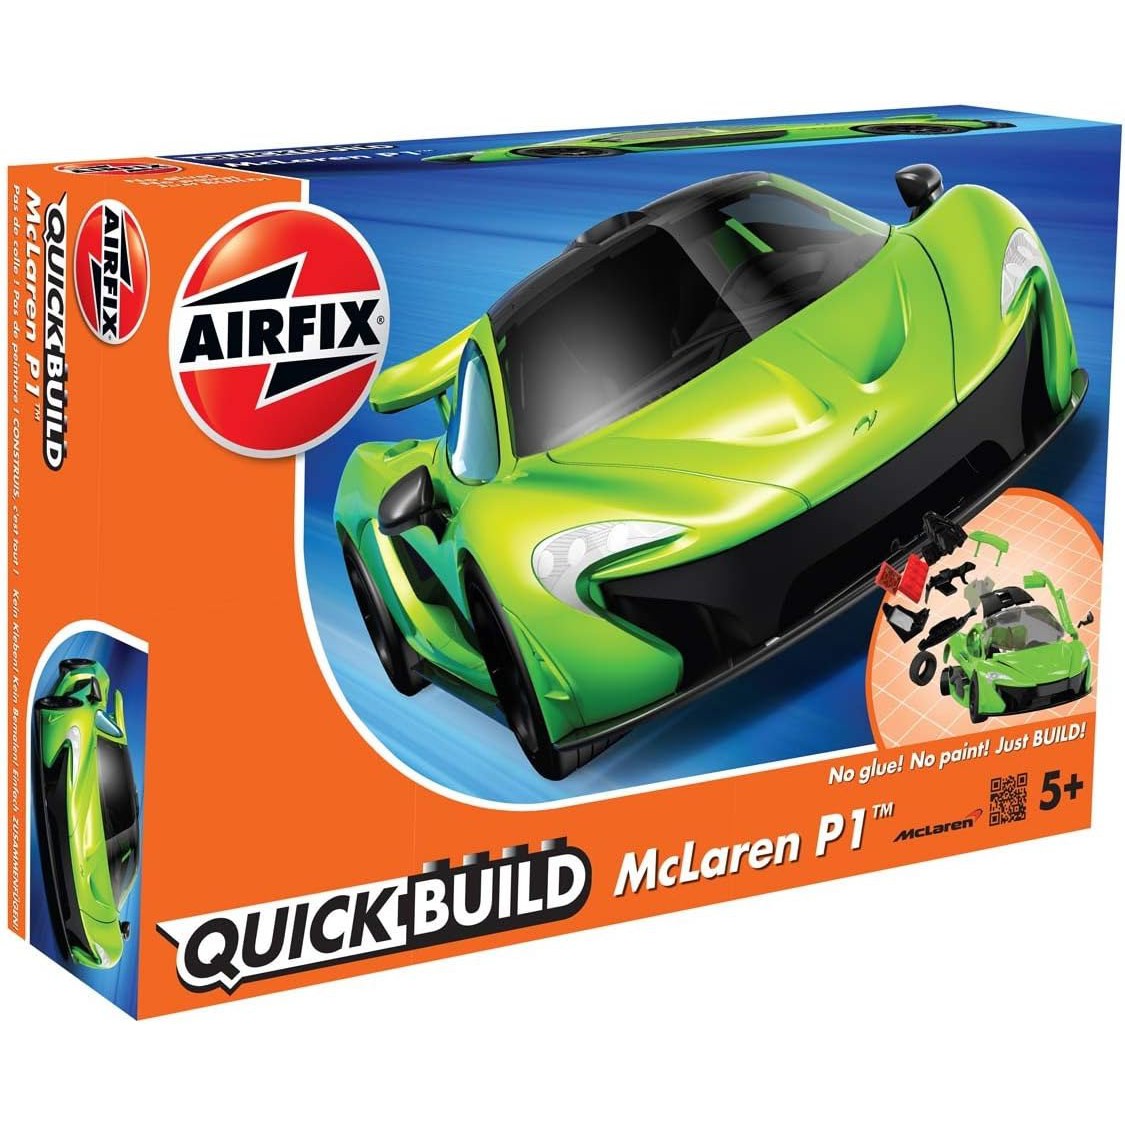 Airfix Quickbuild McLaren P1 - Green